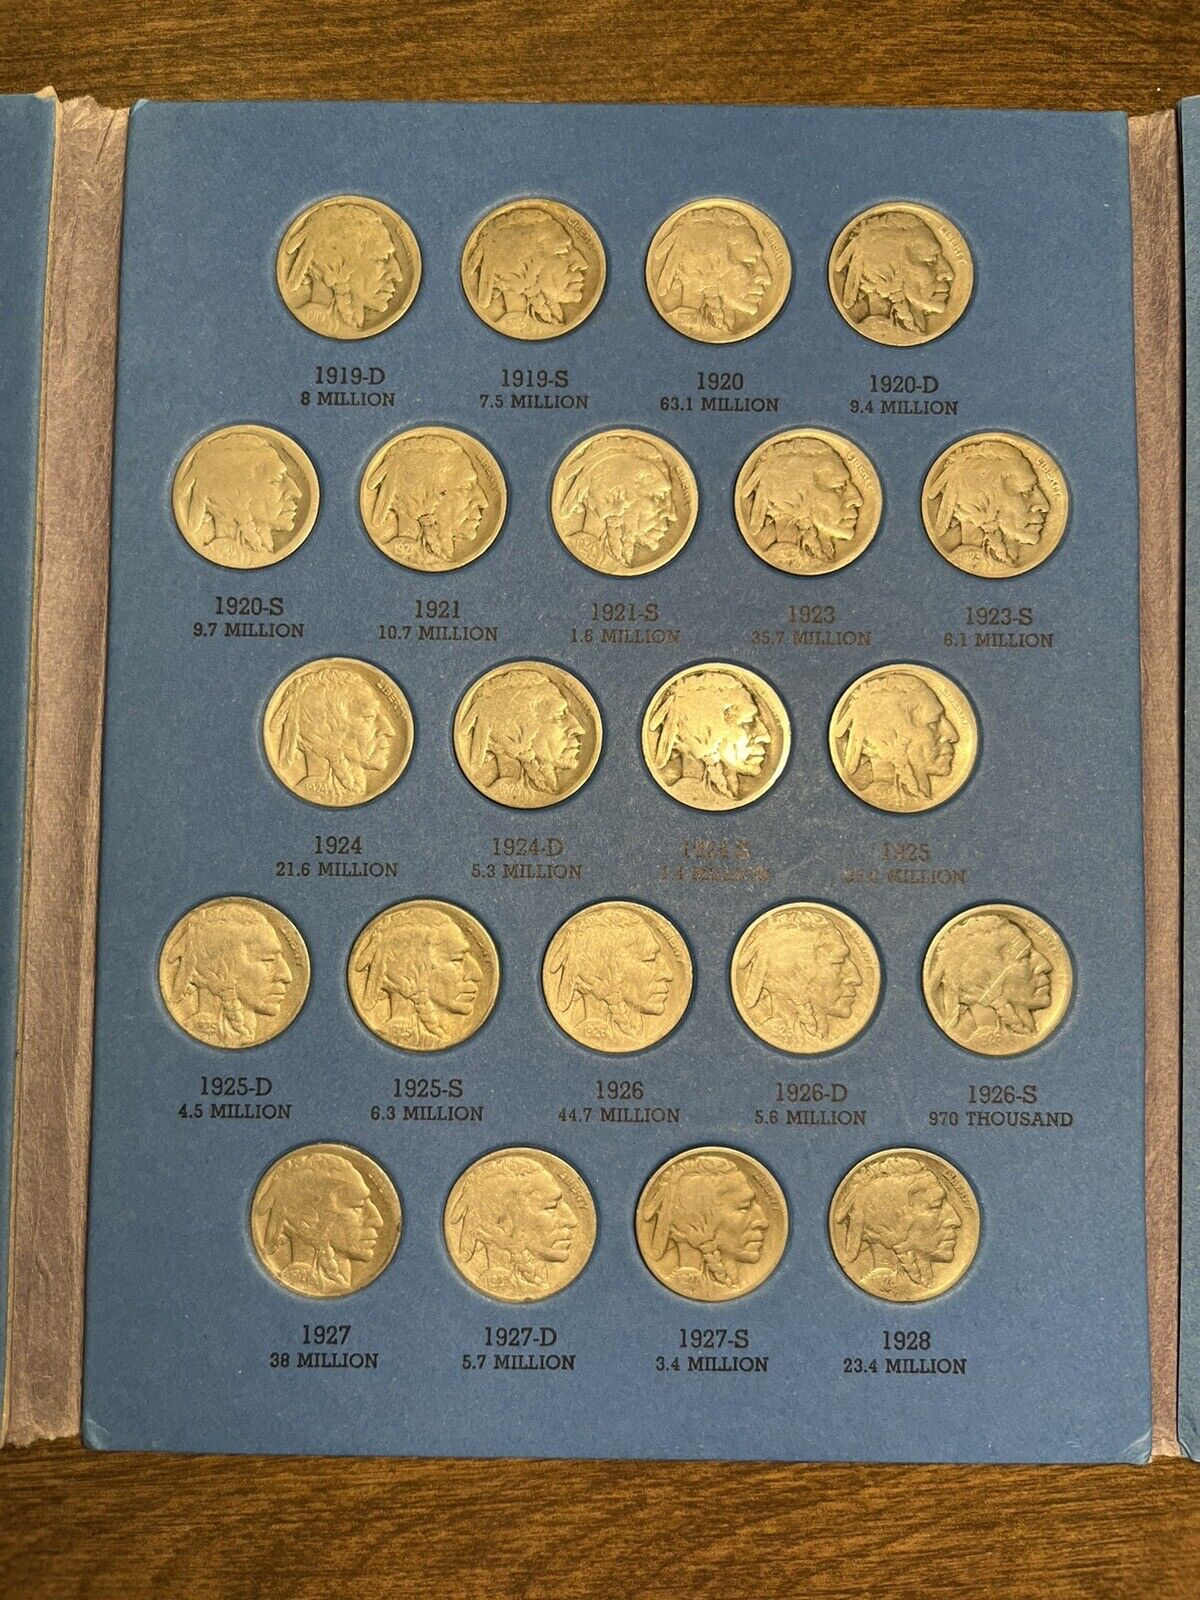 Buffalo Nickel collection in Whitman folder - partial collection